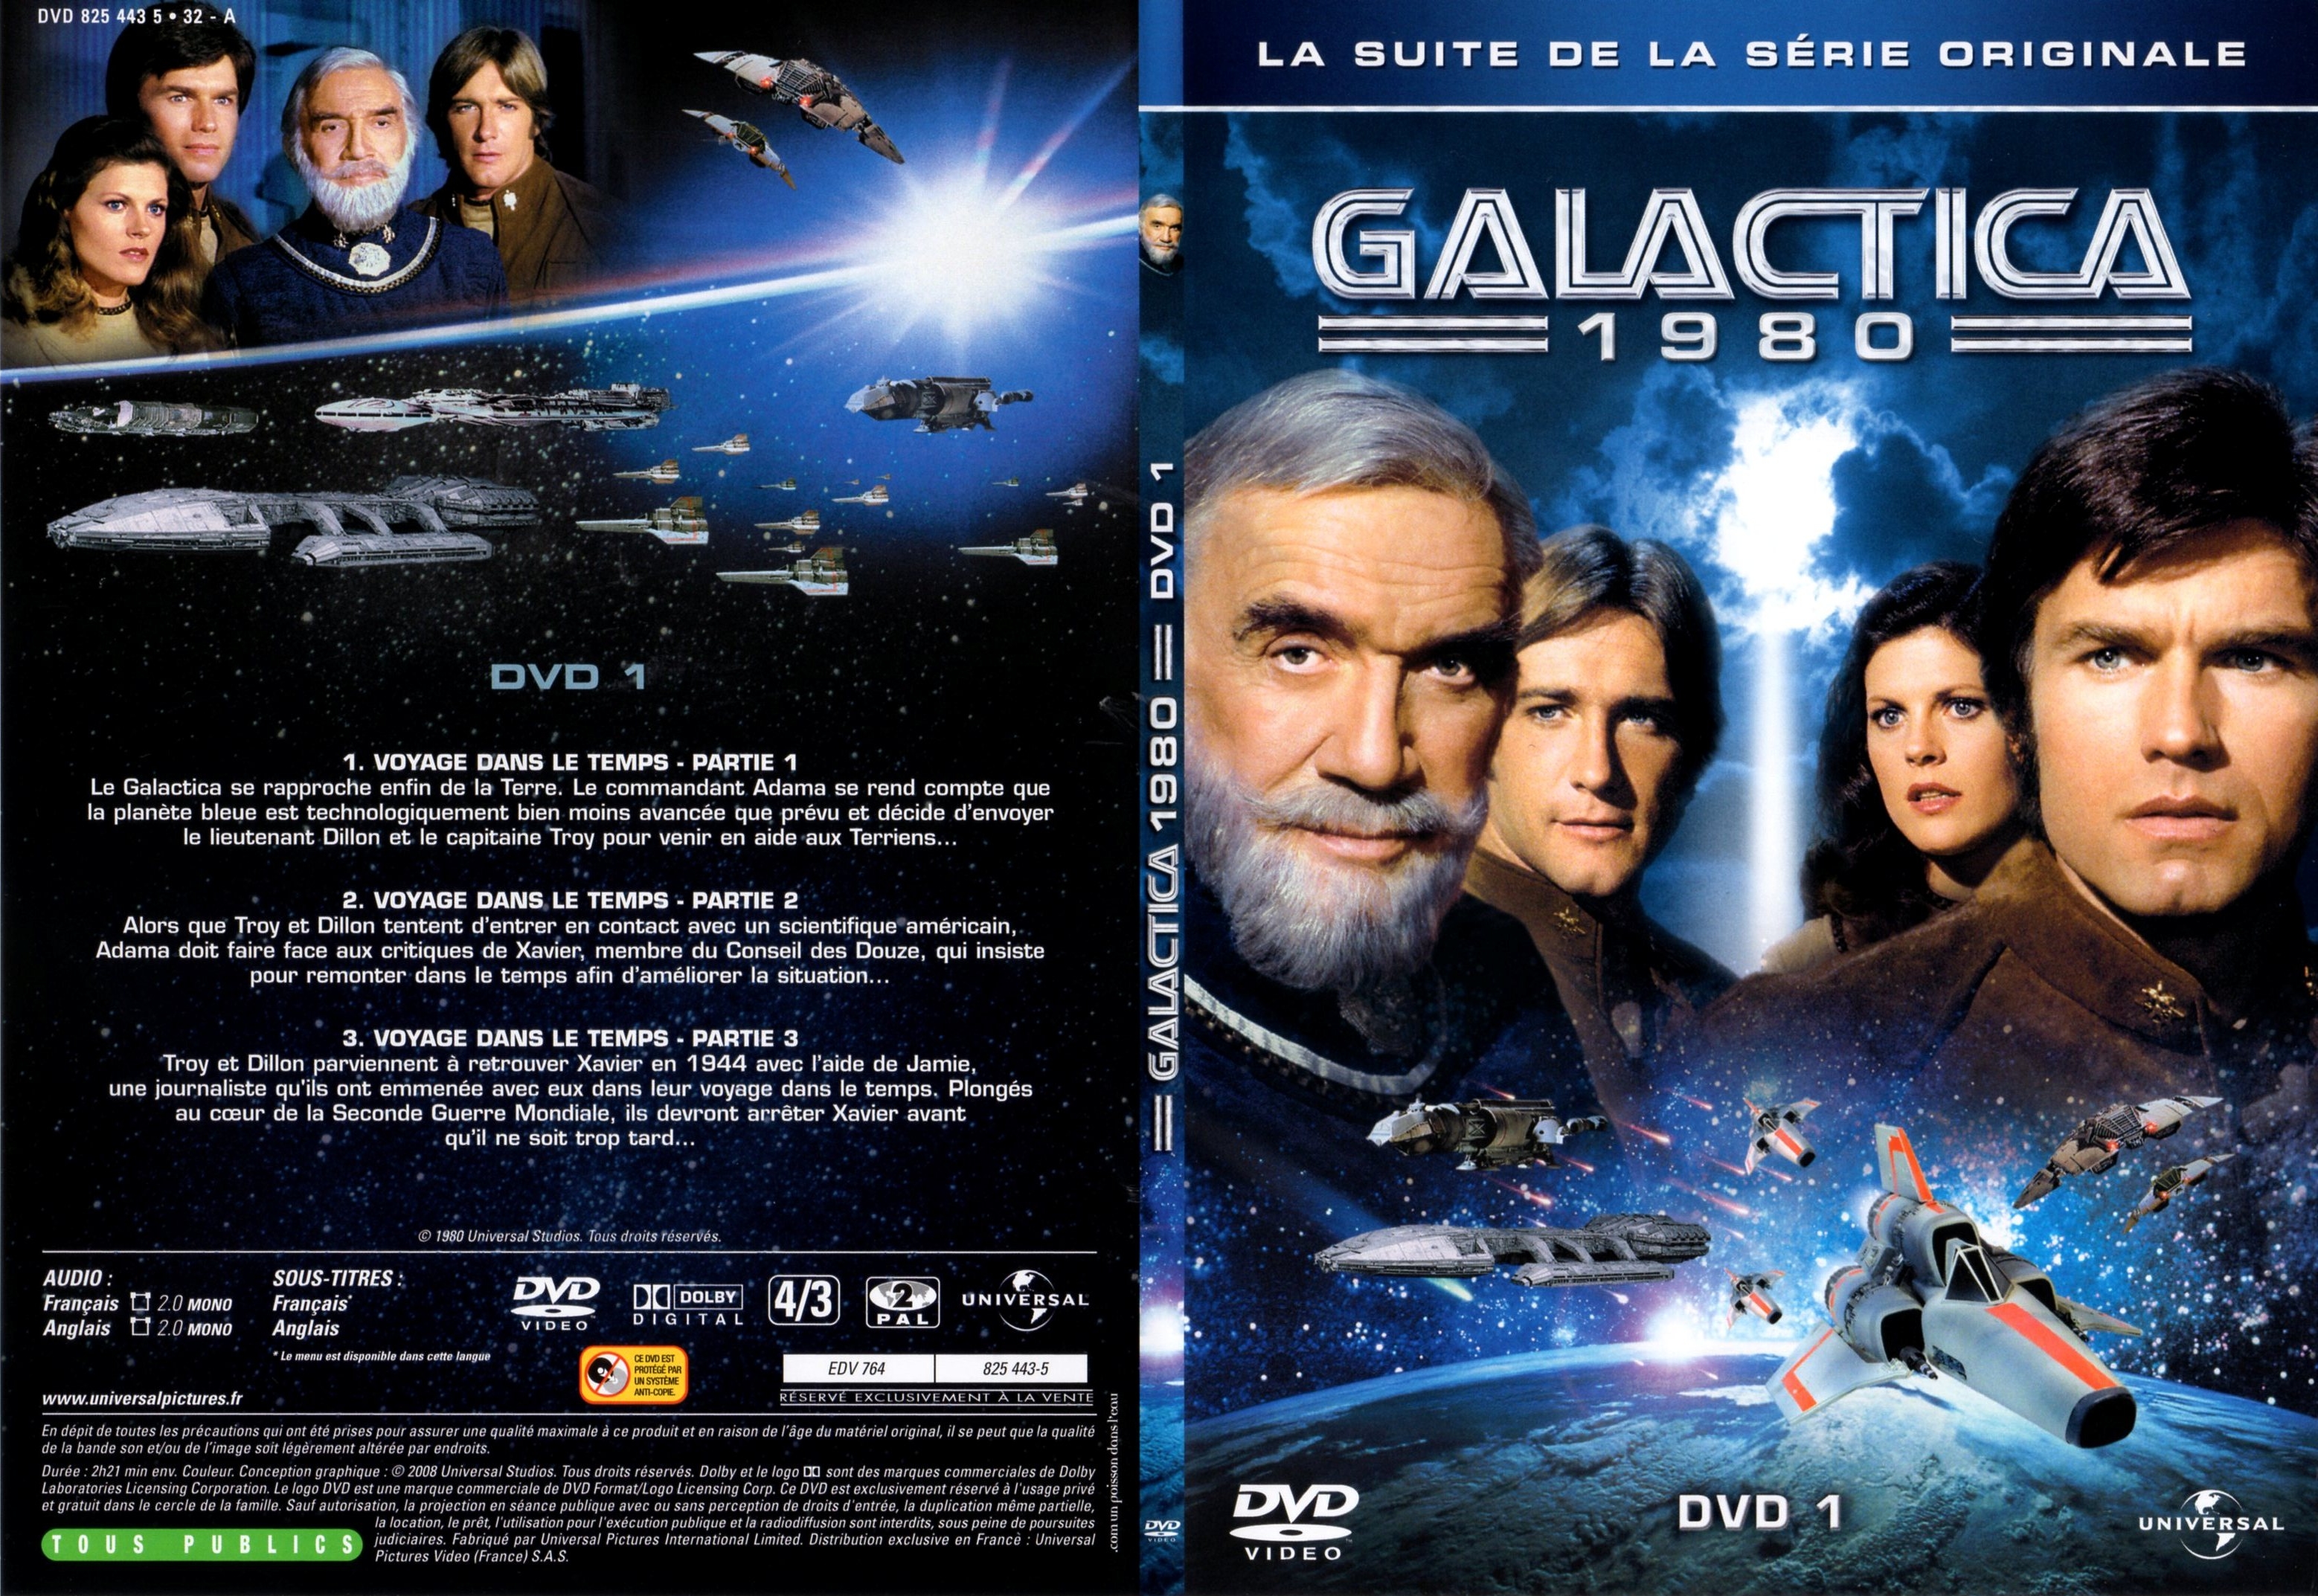 Jaquette DVD Galactica 1980 DVD 1.